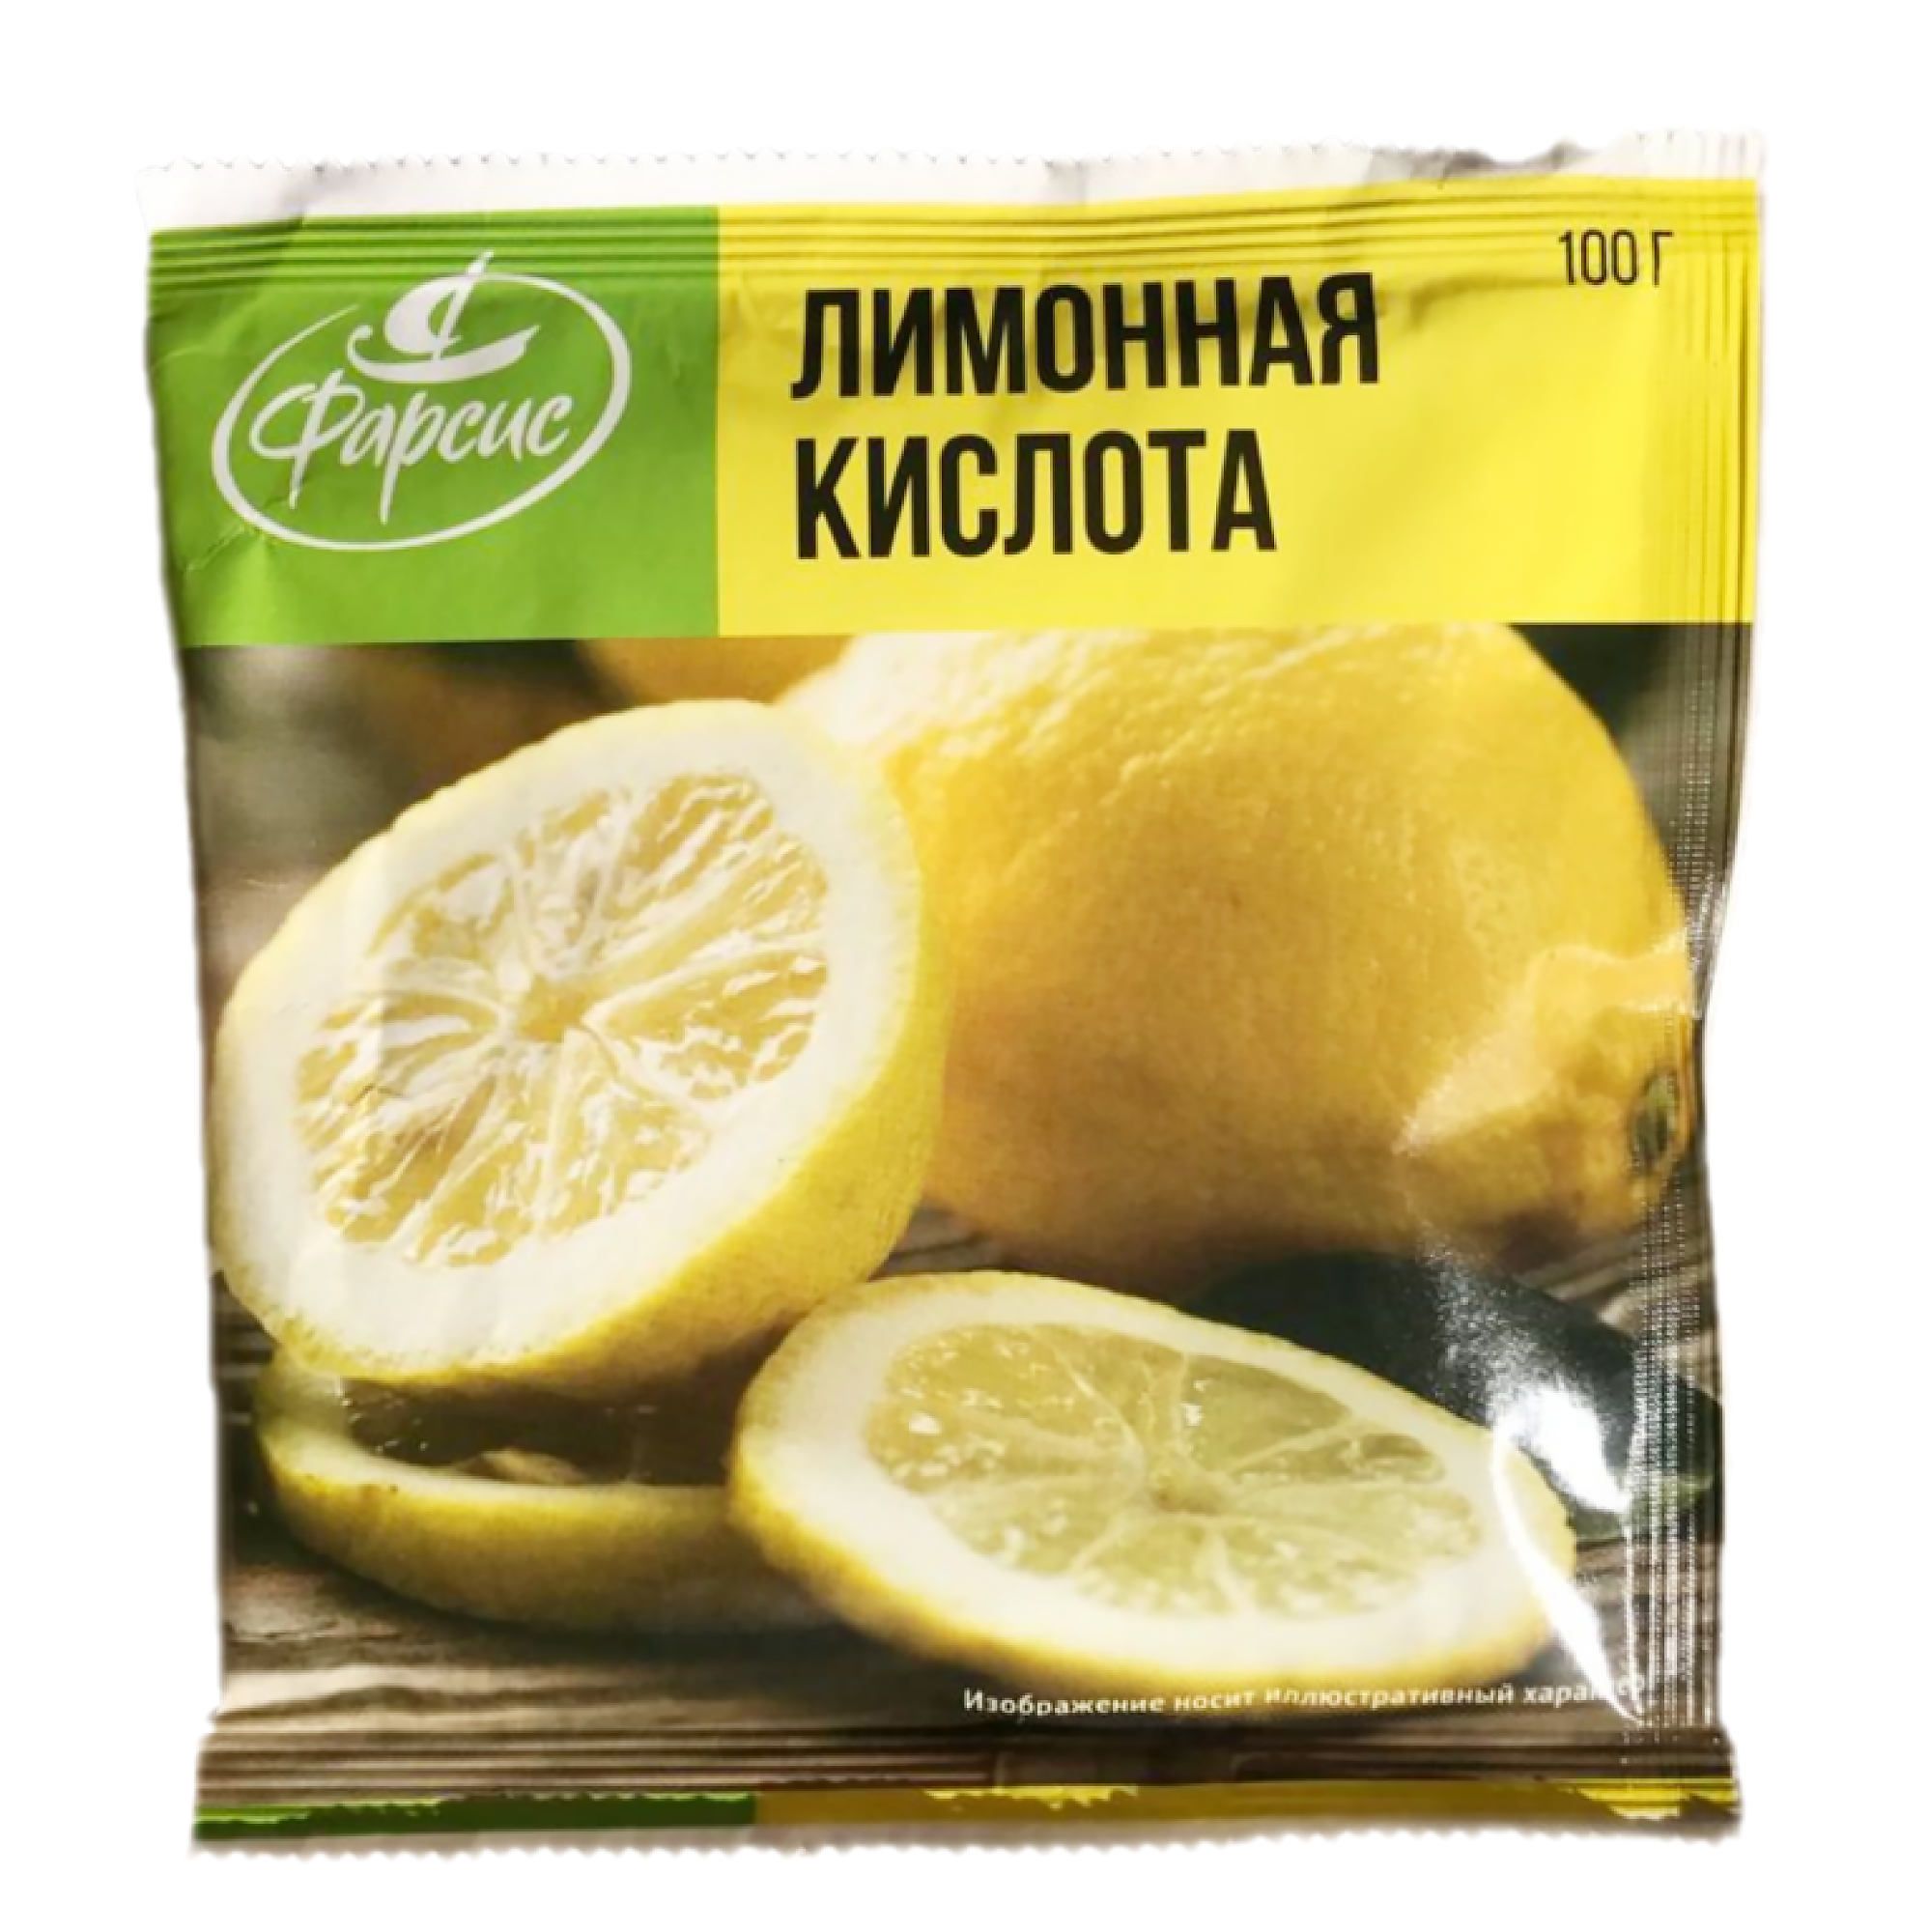 Лимонная кислота 100гр. ООО "Фарсис"